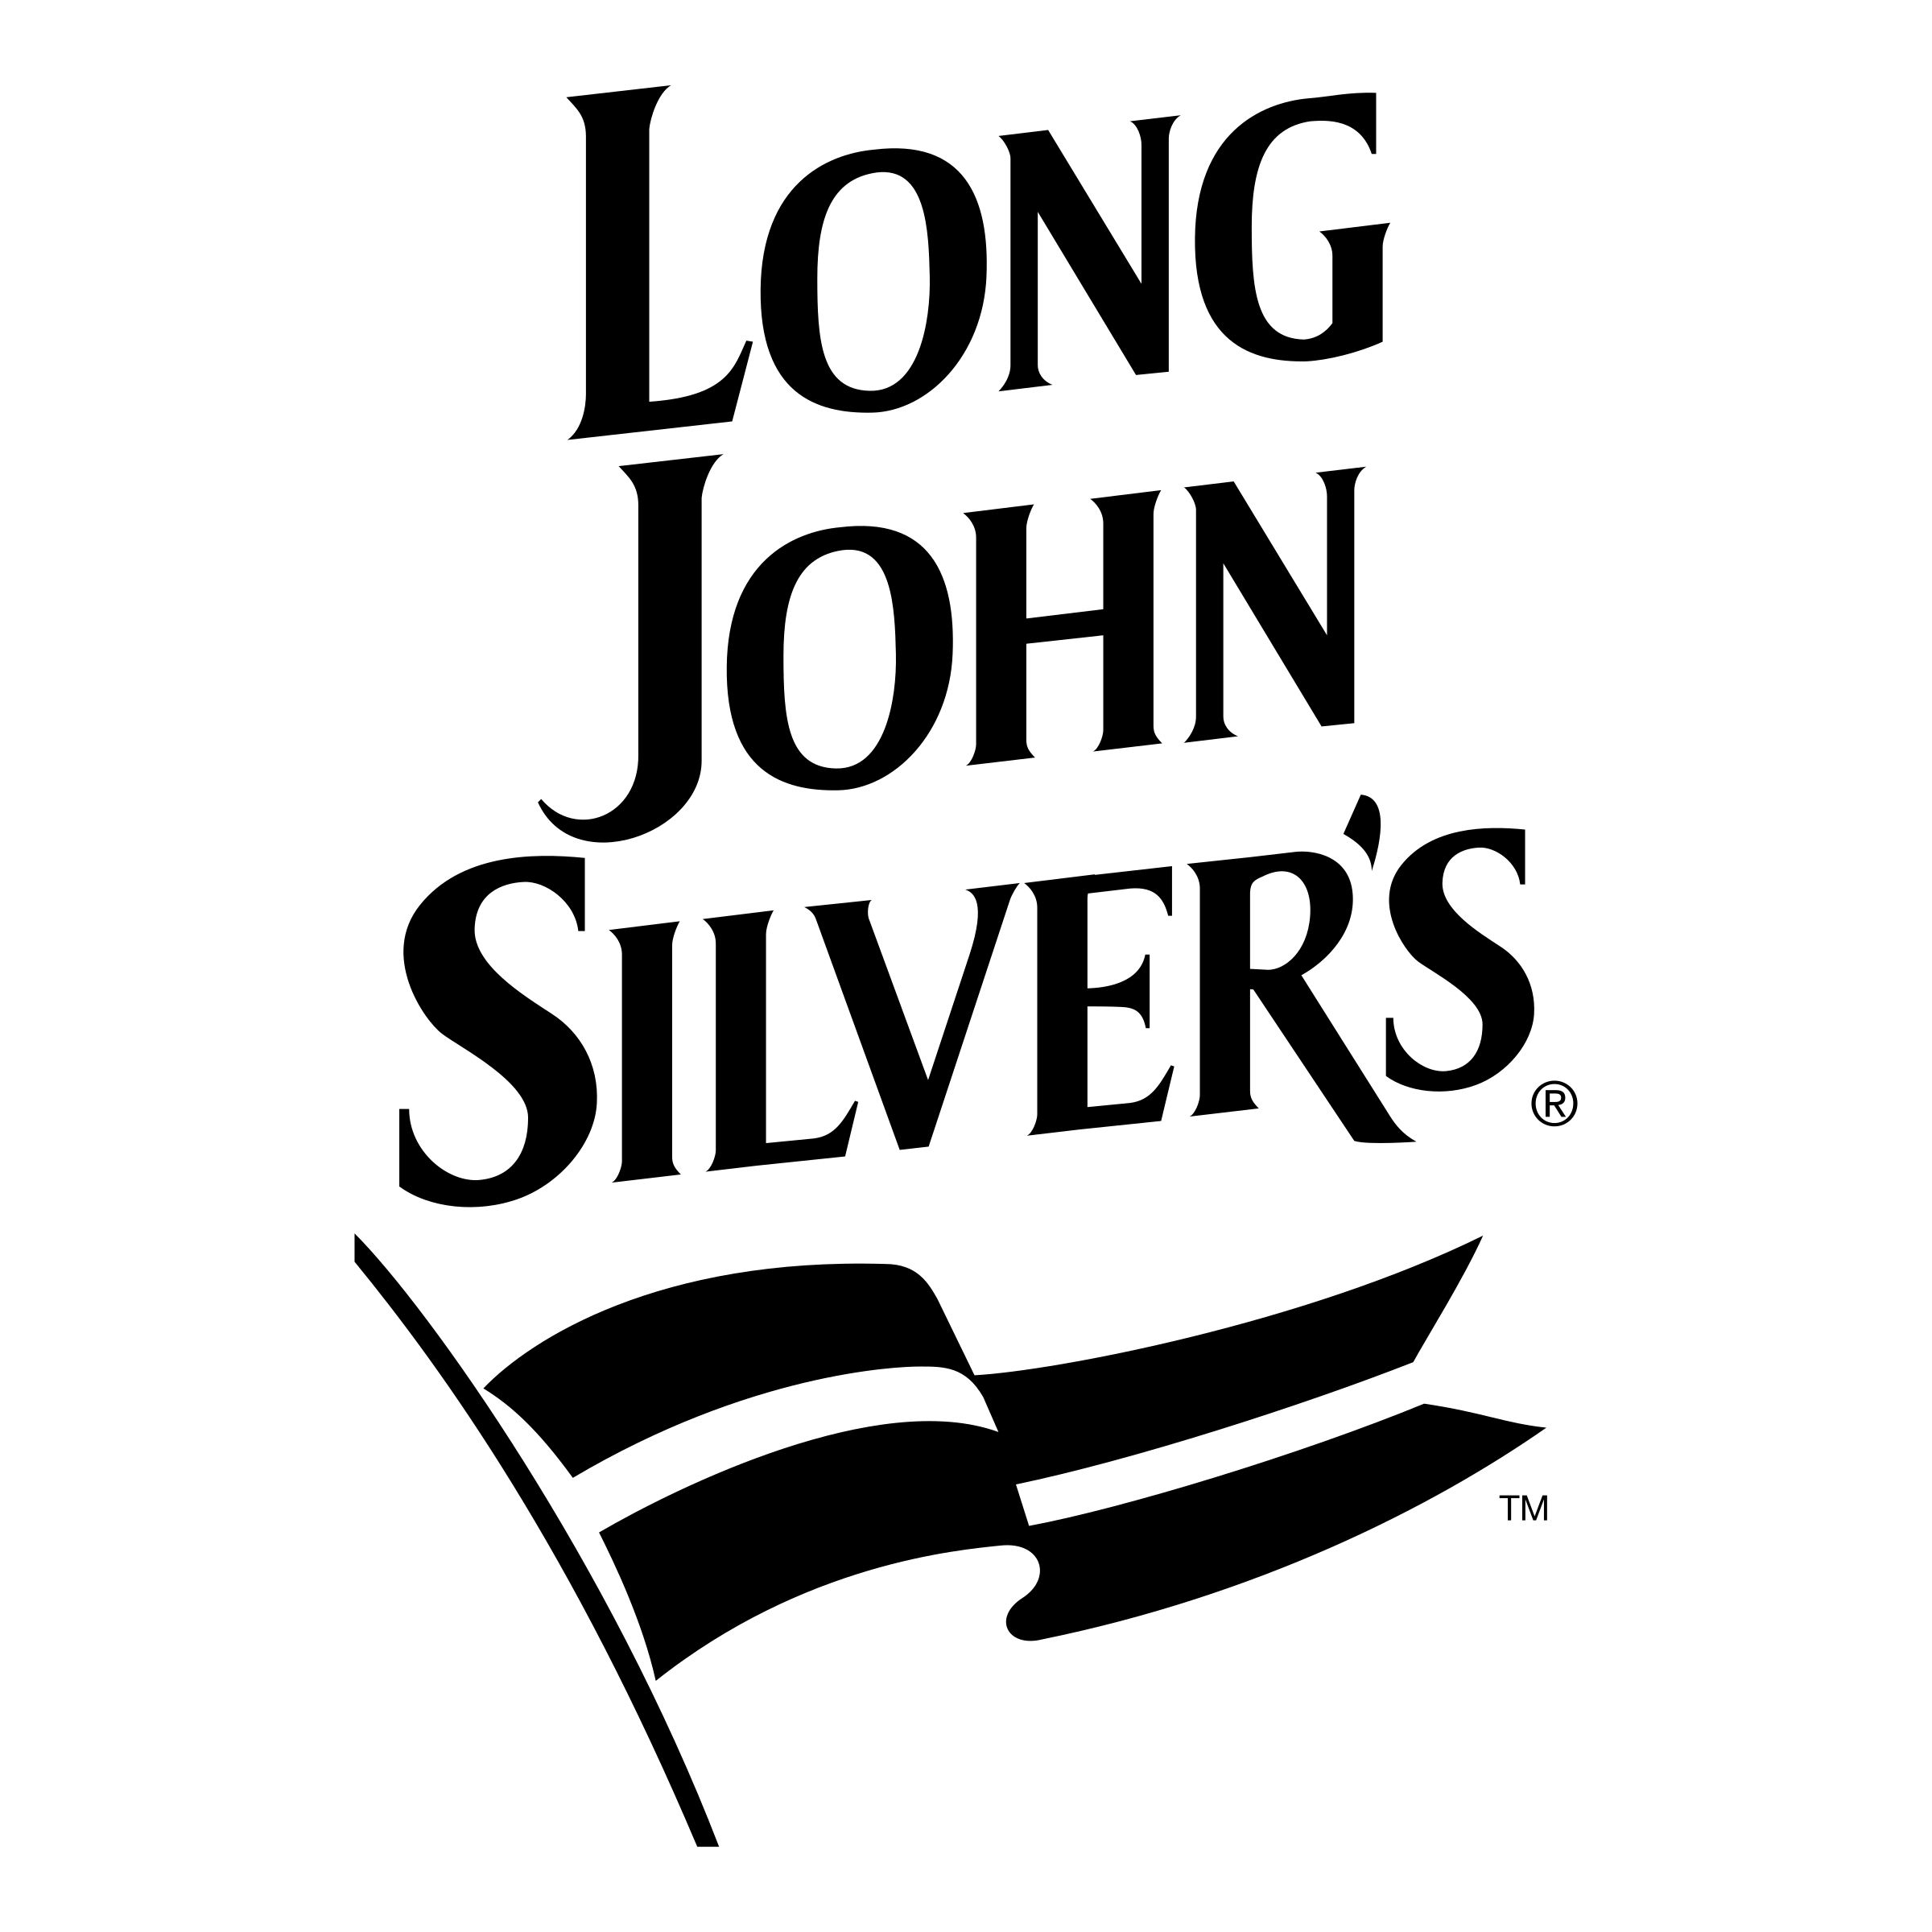 Silver's Logo - Long John Silver's Logo PNG Transparent & SVG Vector